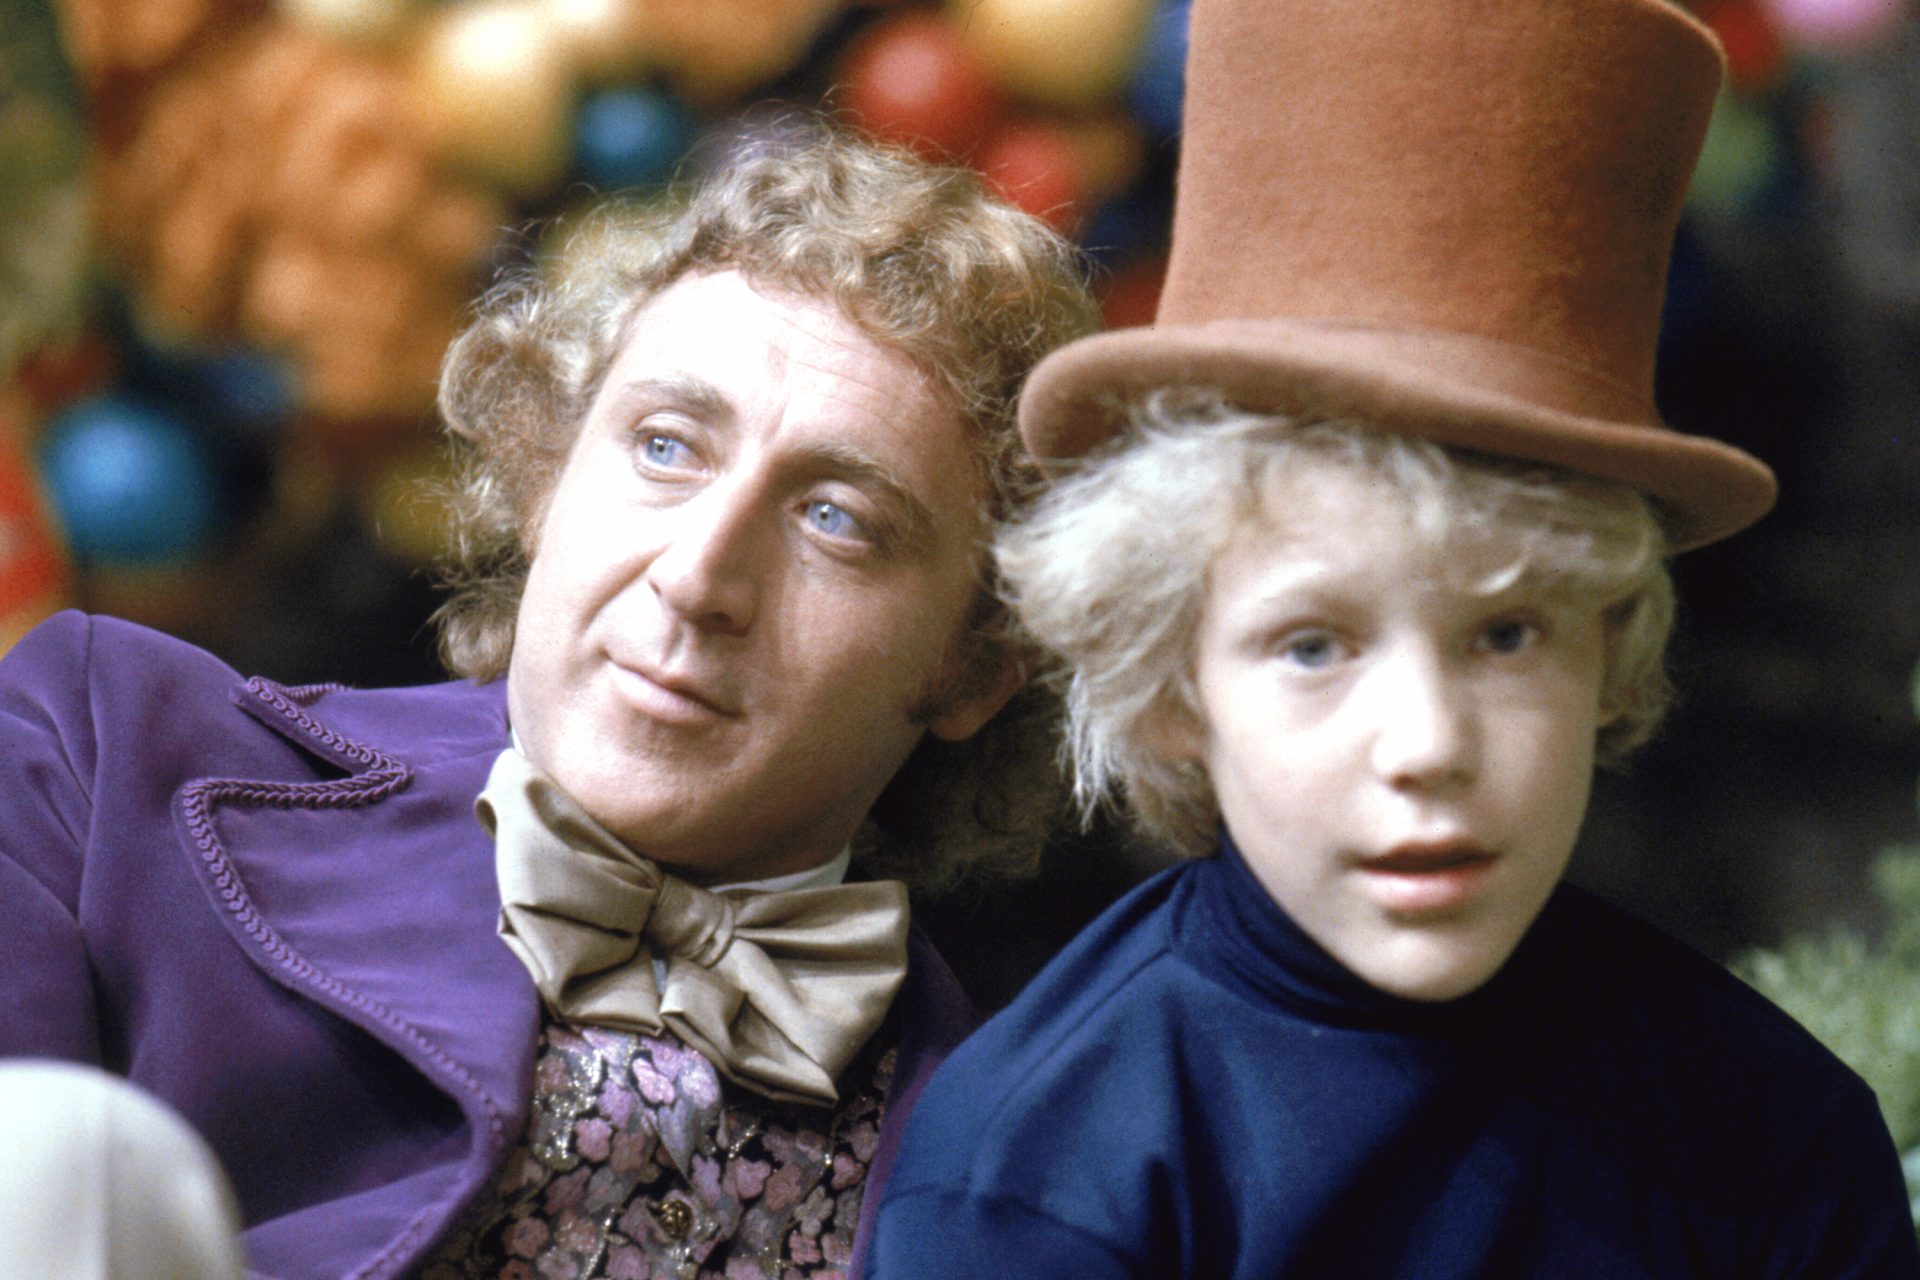 Willy Wonka: Which actor played him best?